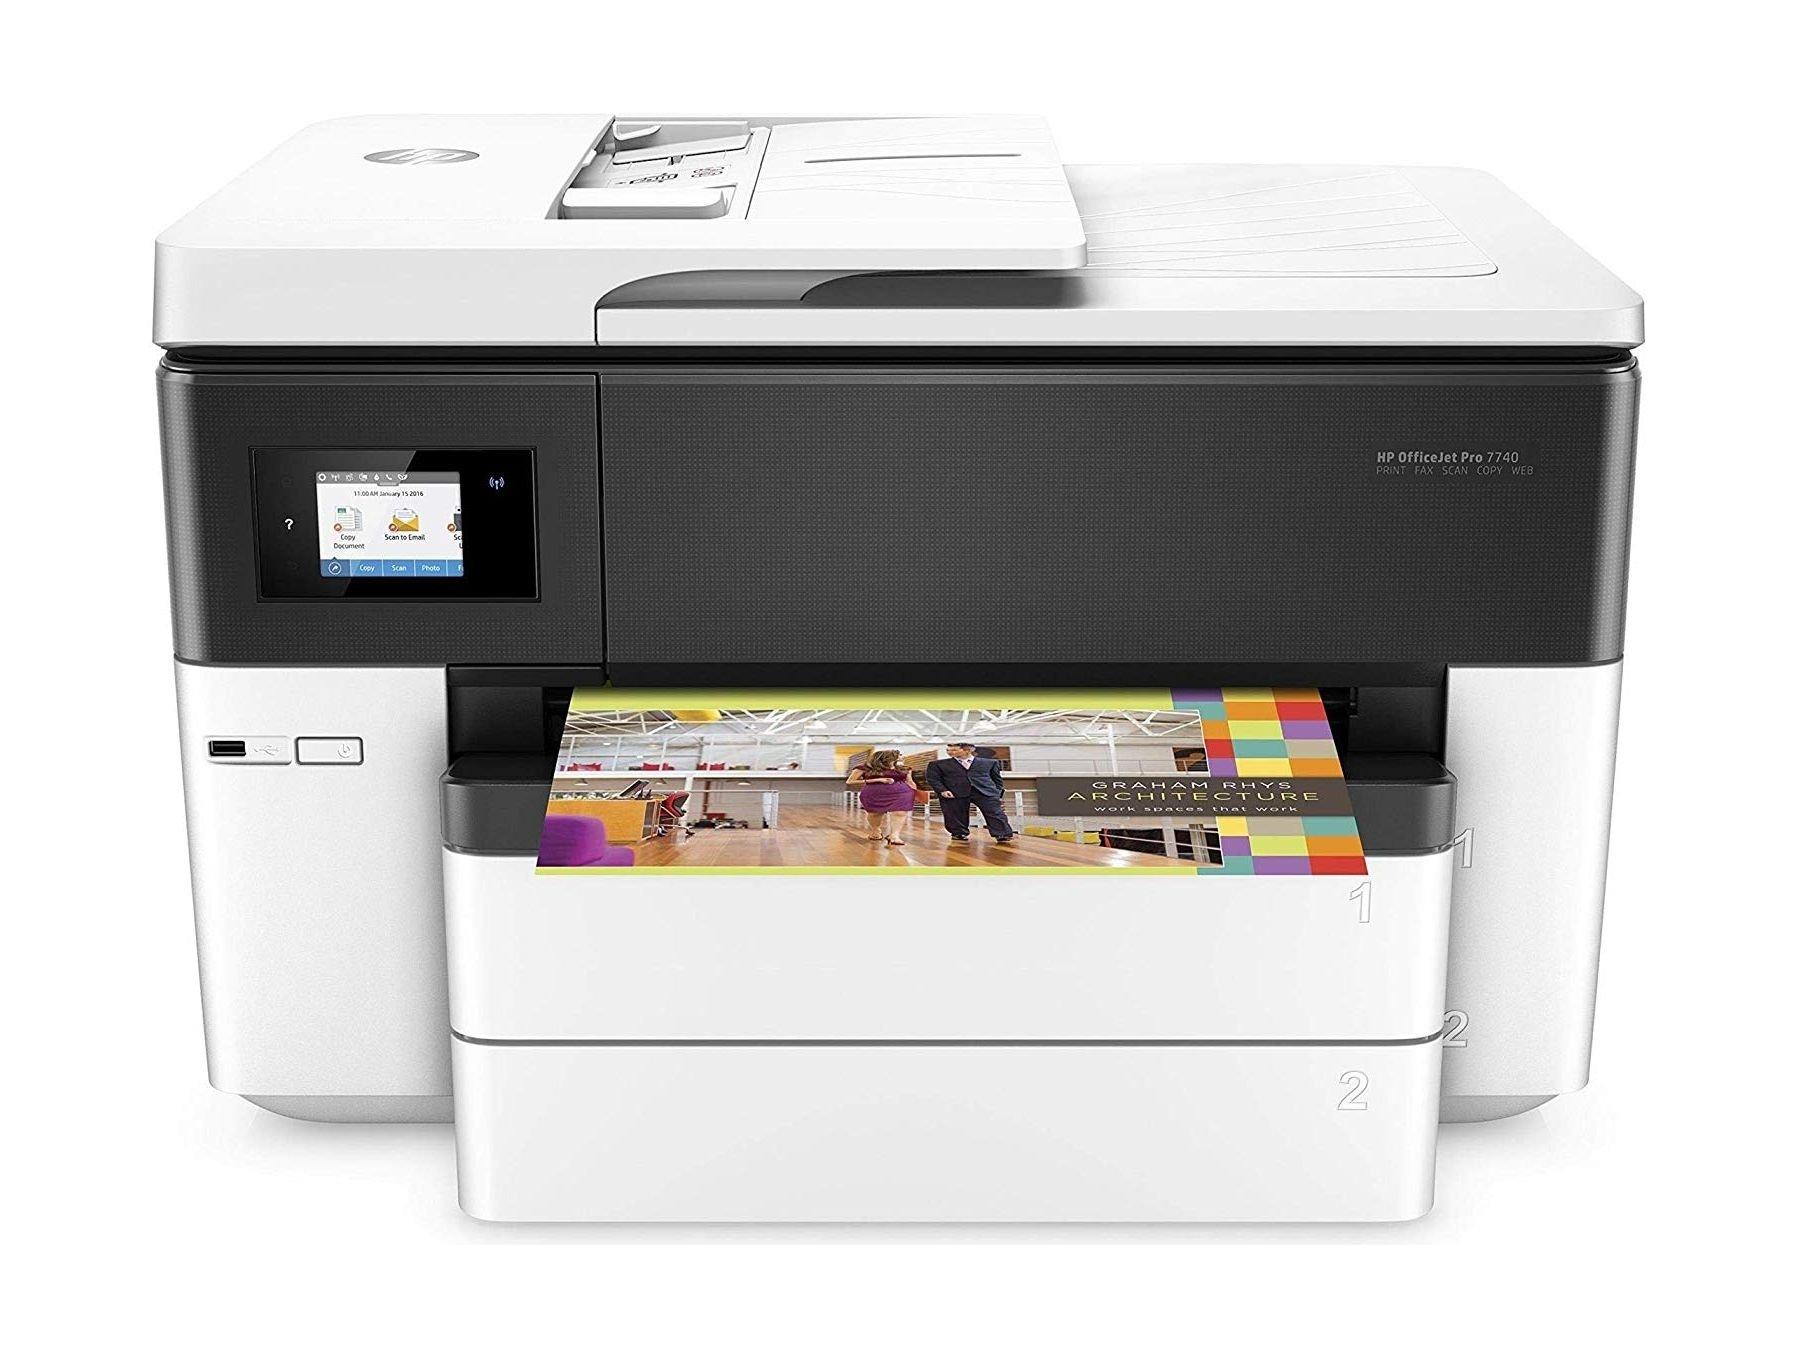 Buy Hp officejet pro 7740 all-in-one printer, g5j38a - white in Kuwait